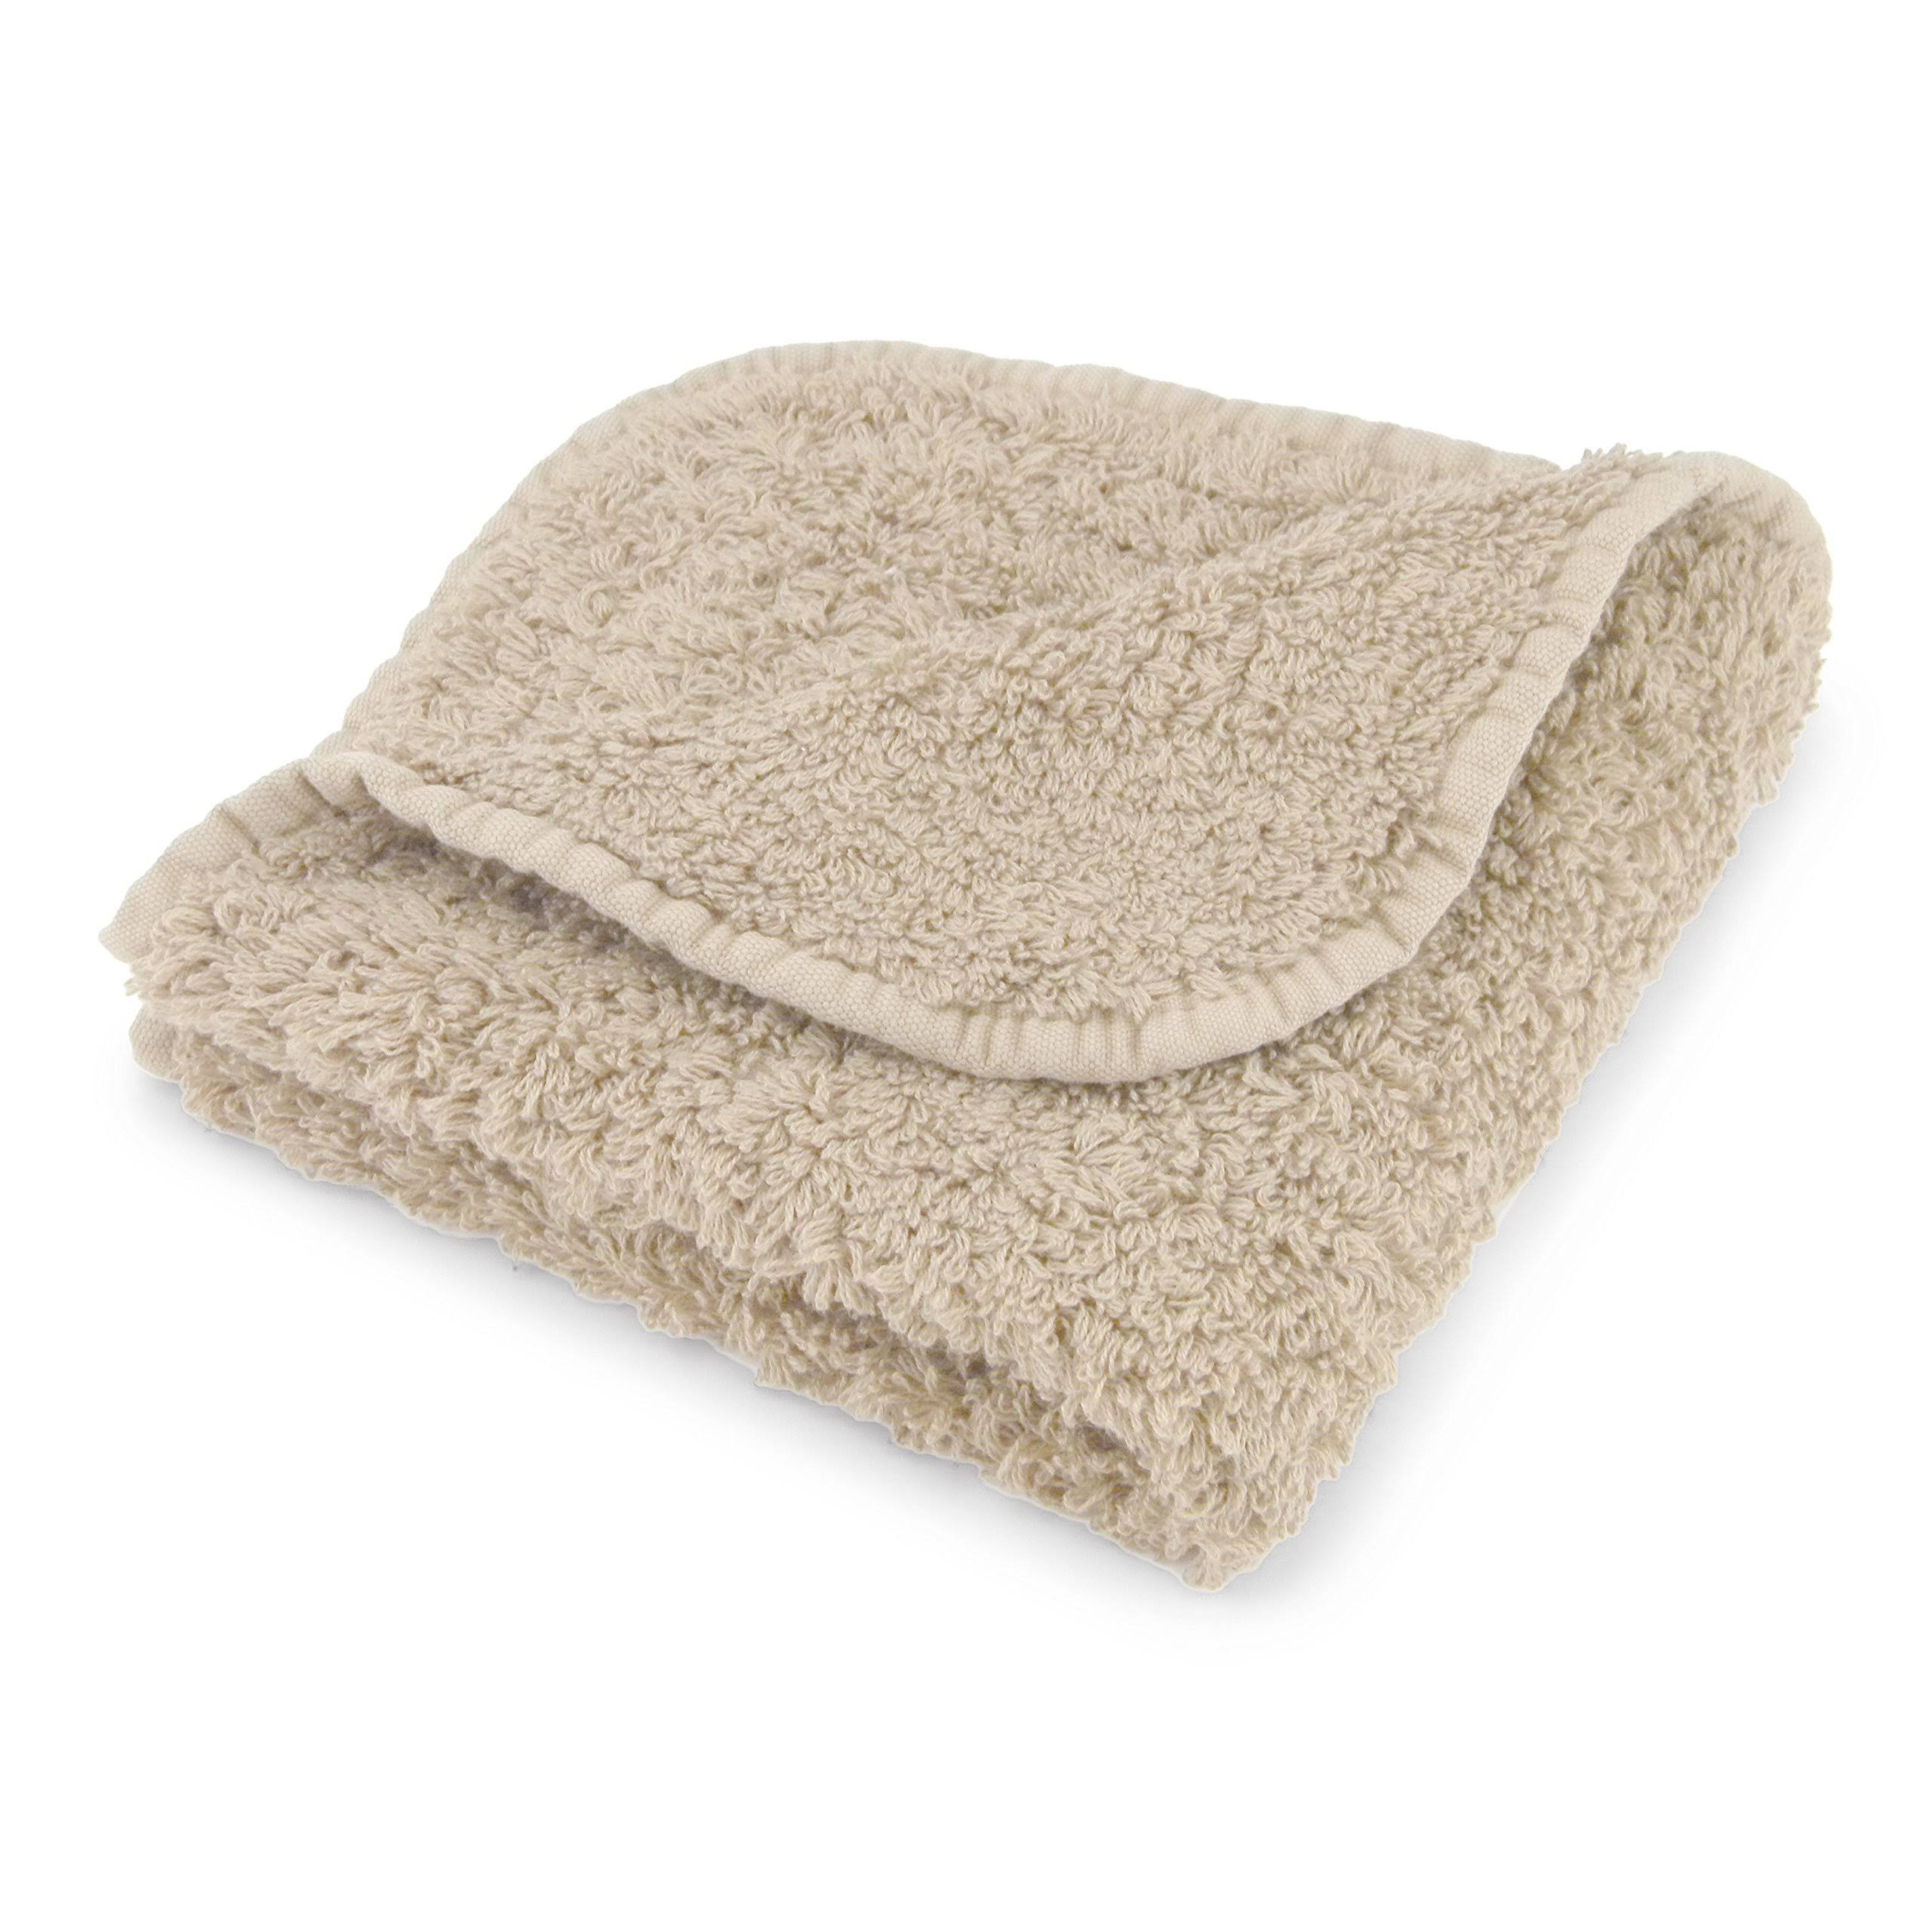 Abyss Super Pile Towels - Hand Towel 17x30" Linen 770